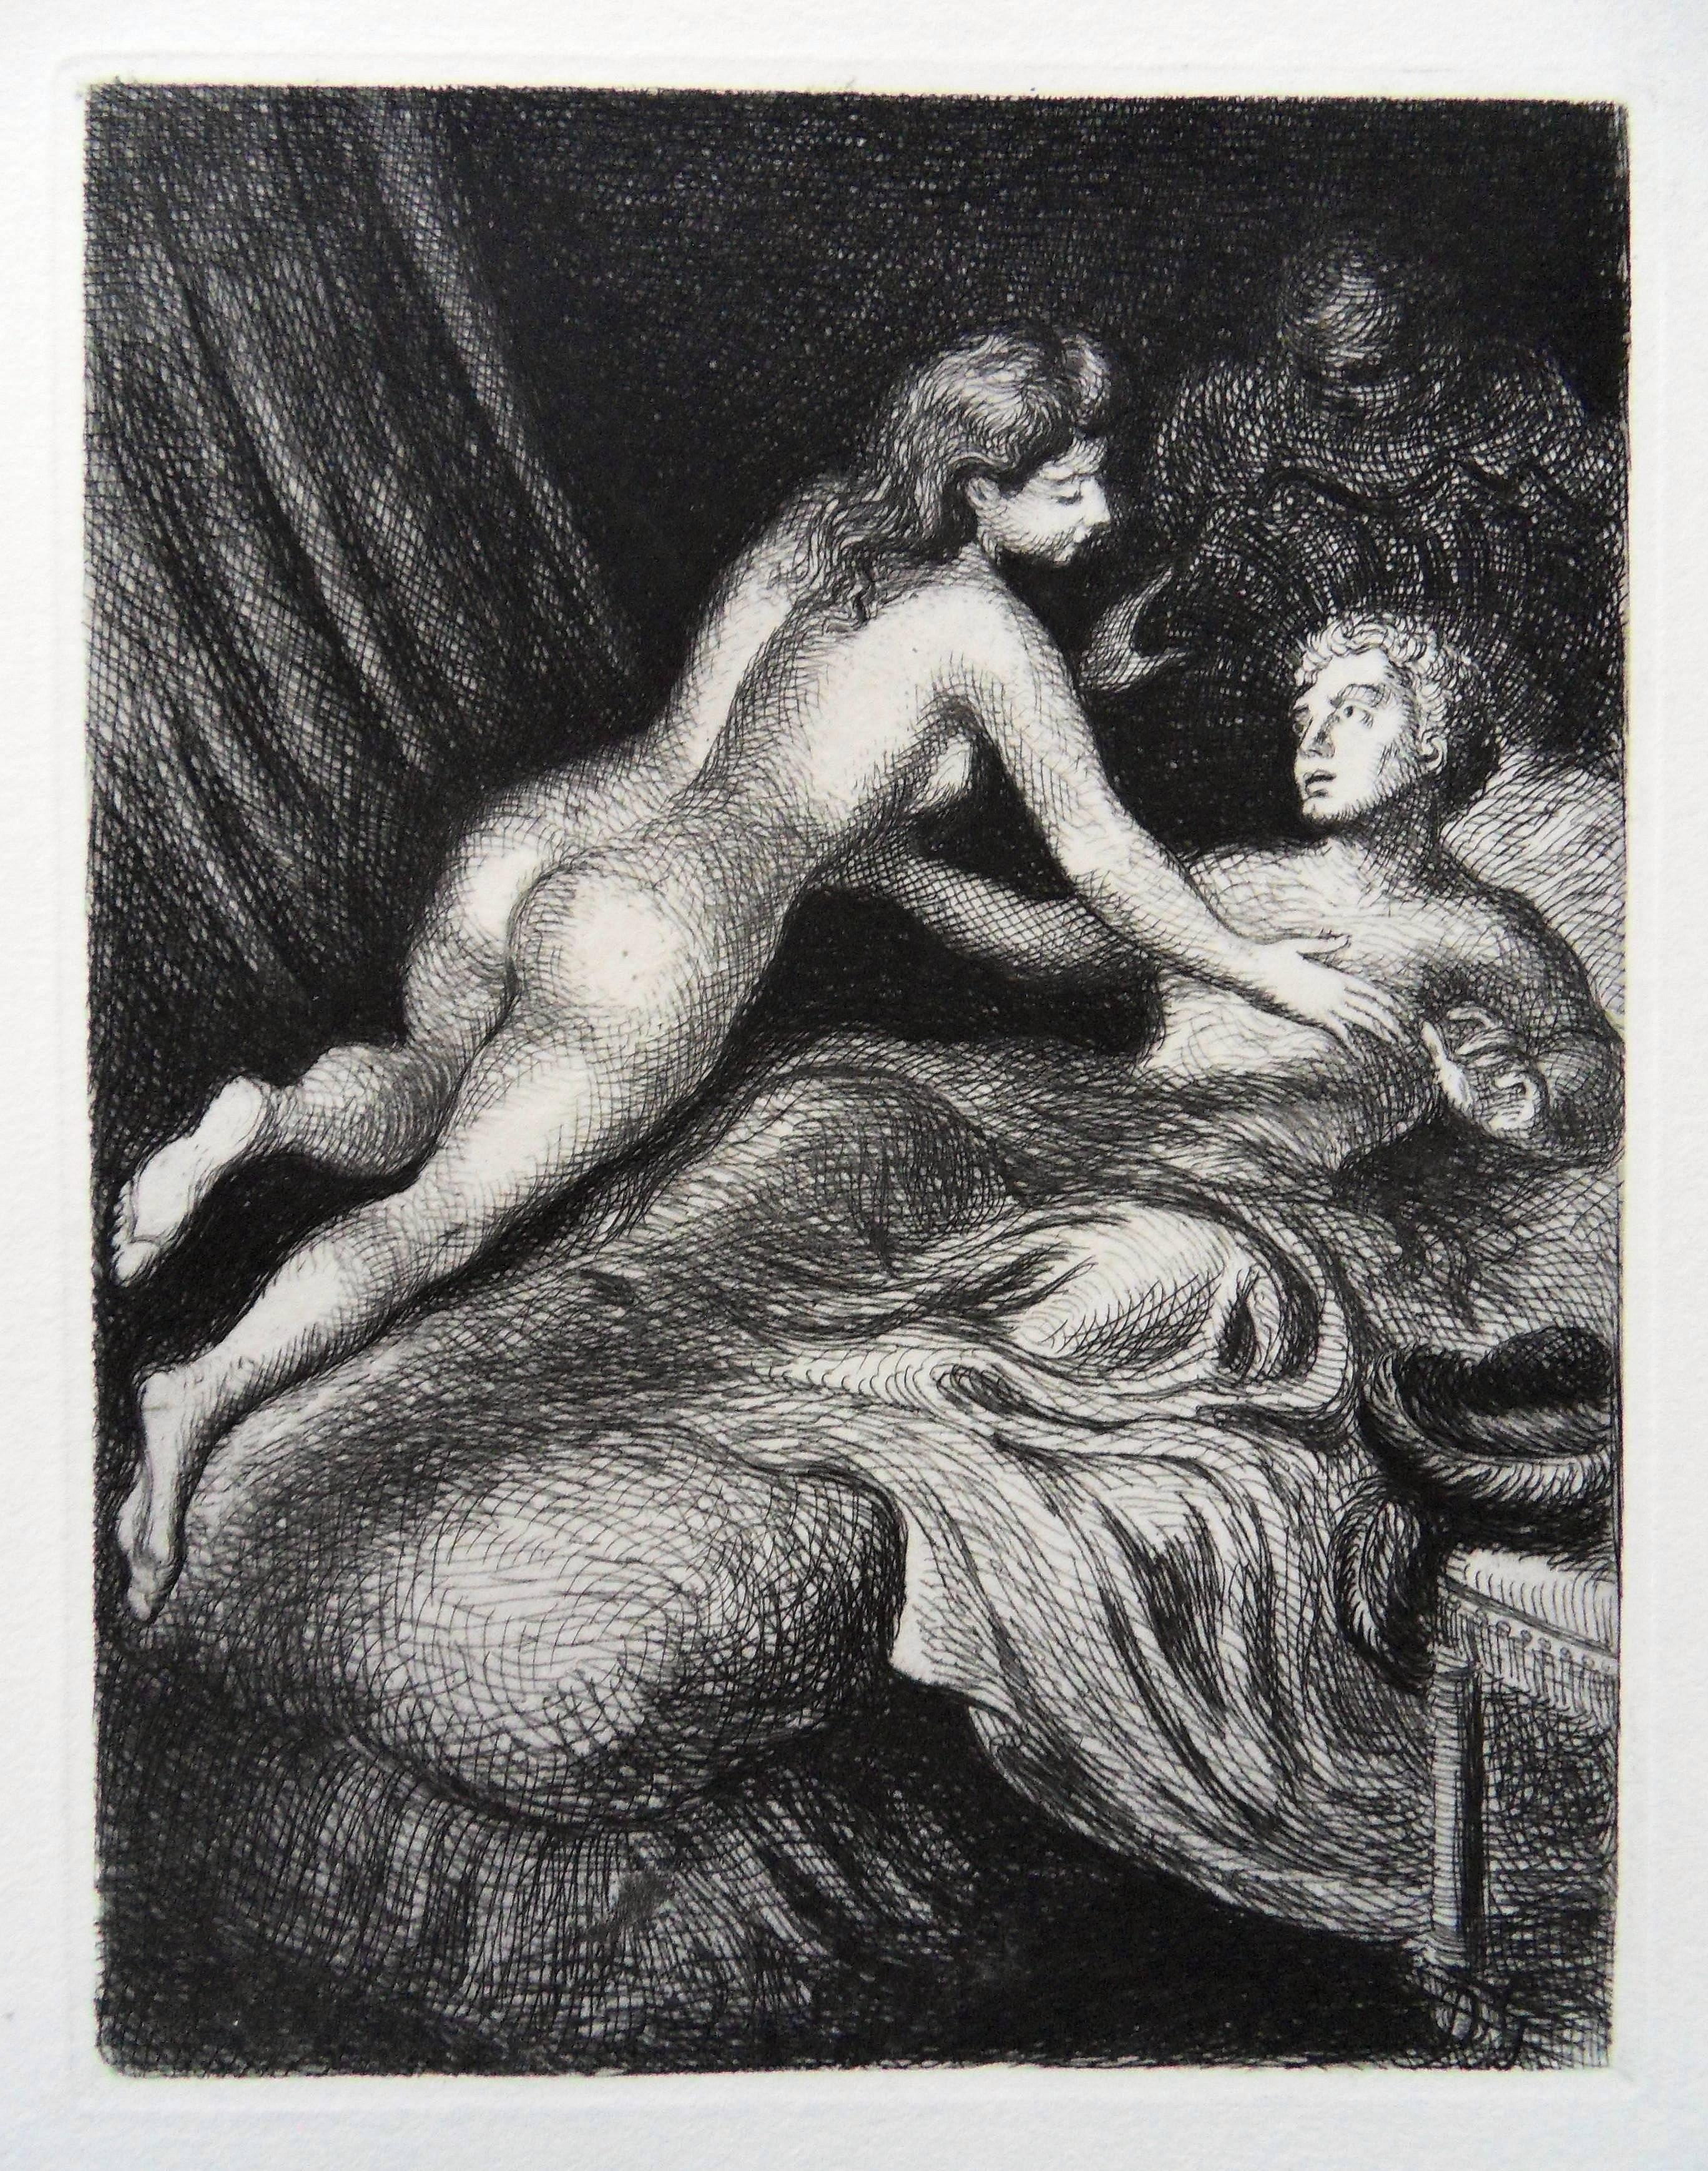 Demetrios Galanis Figurative Print - Lovers in Bed - Original etching, 1943